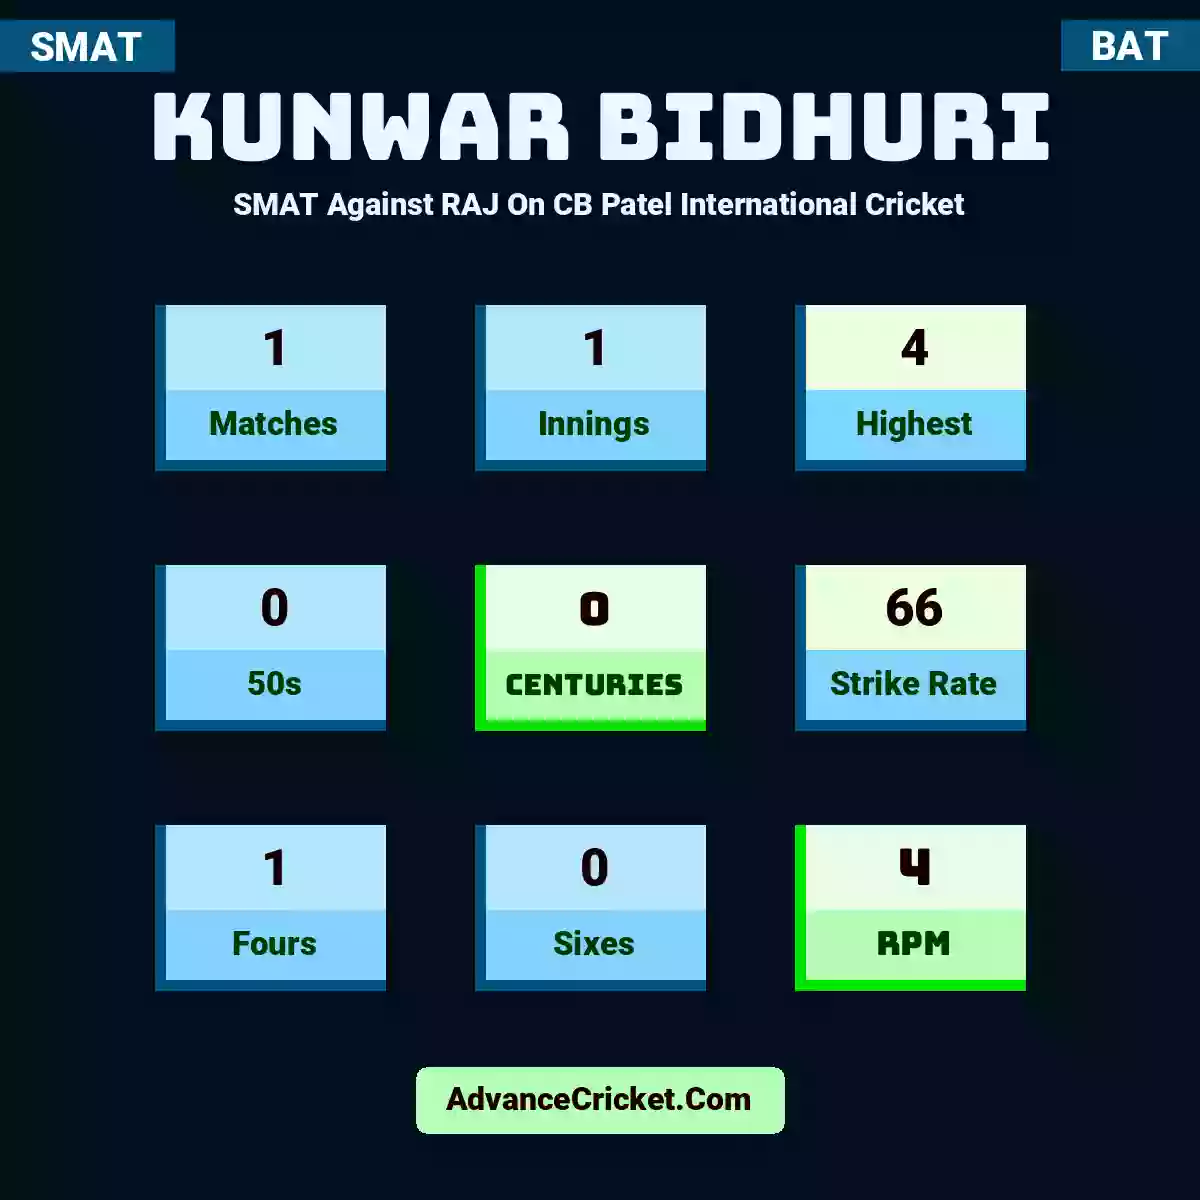 Kunwar Bidhuri SMAT  Against RAJ On CB Patel International Cricket, Kunwar Bidhuri played 1 matches, scored 4 runs as highest, 0 half-centuries, and 0 centuries, with a strike rate of 66. K.Bidhuri hit 1 fours and 0 sixes, with an RPM of 4.